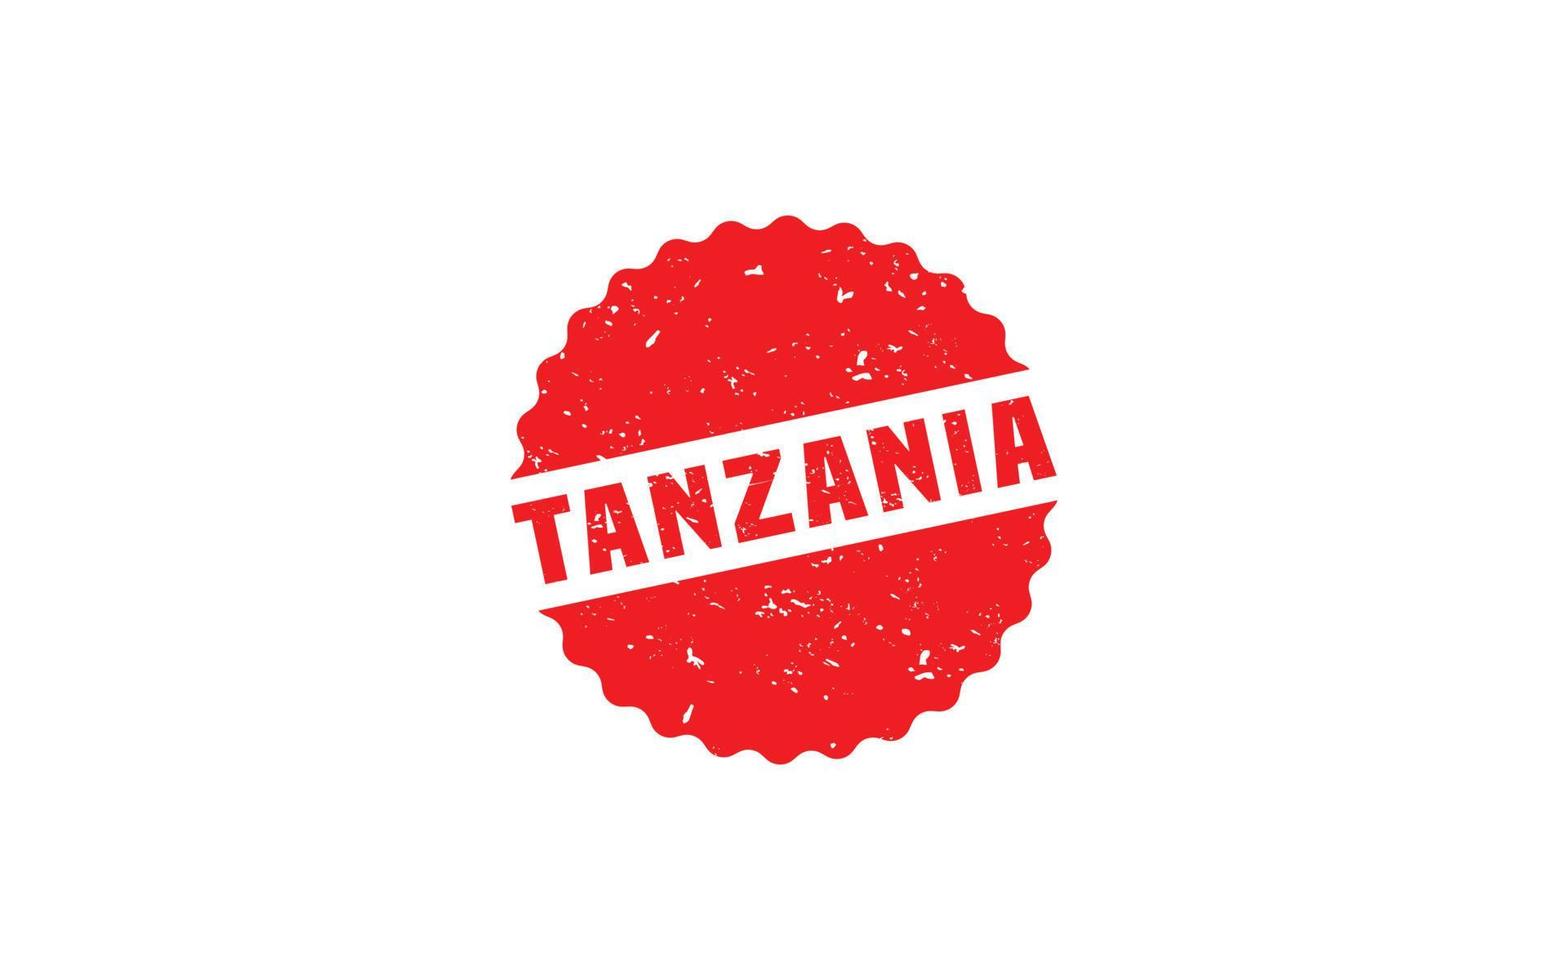 carimbo de borracha da Tanzânia com estilo grunge em fundo branco vetor